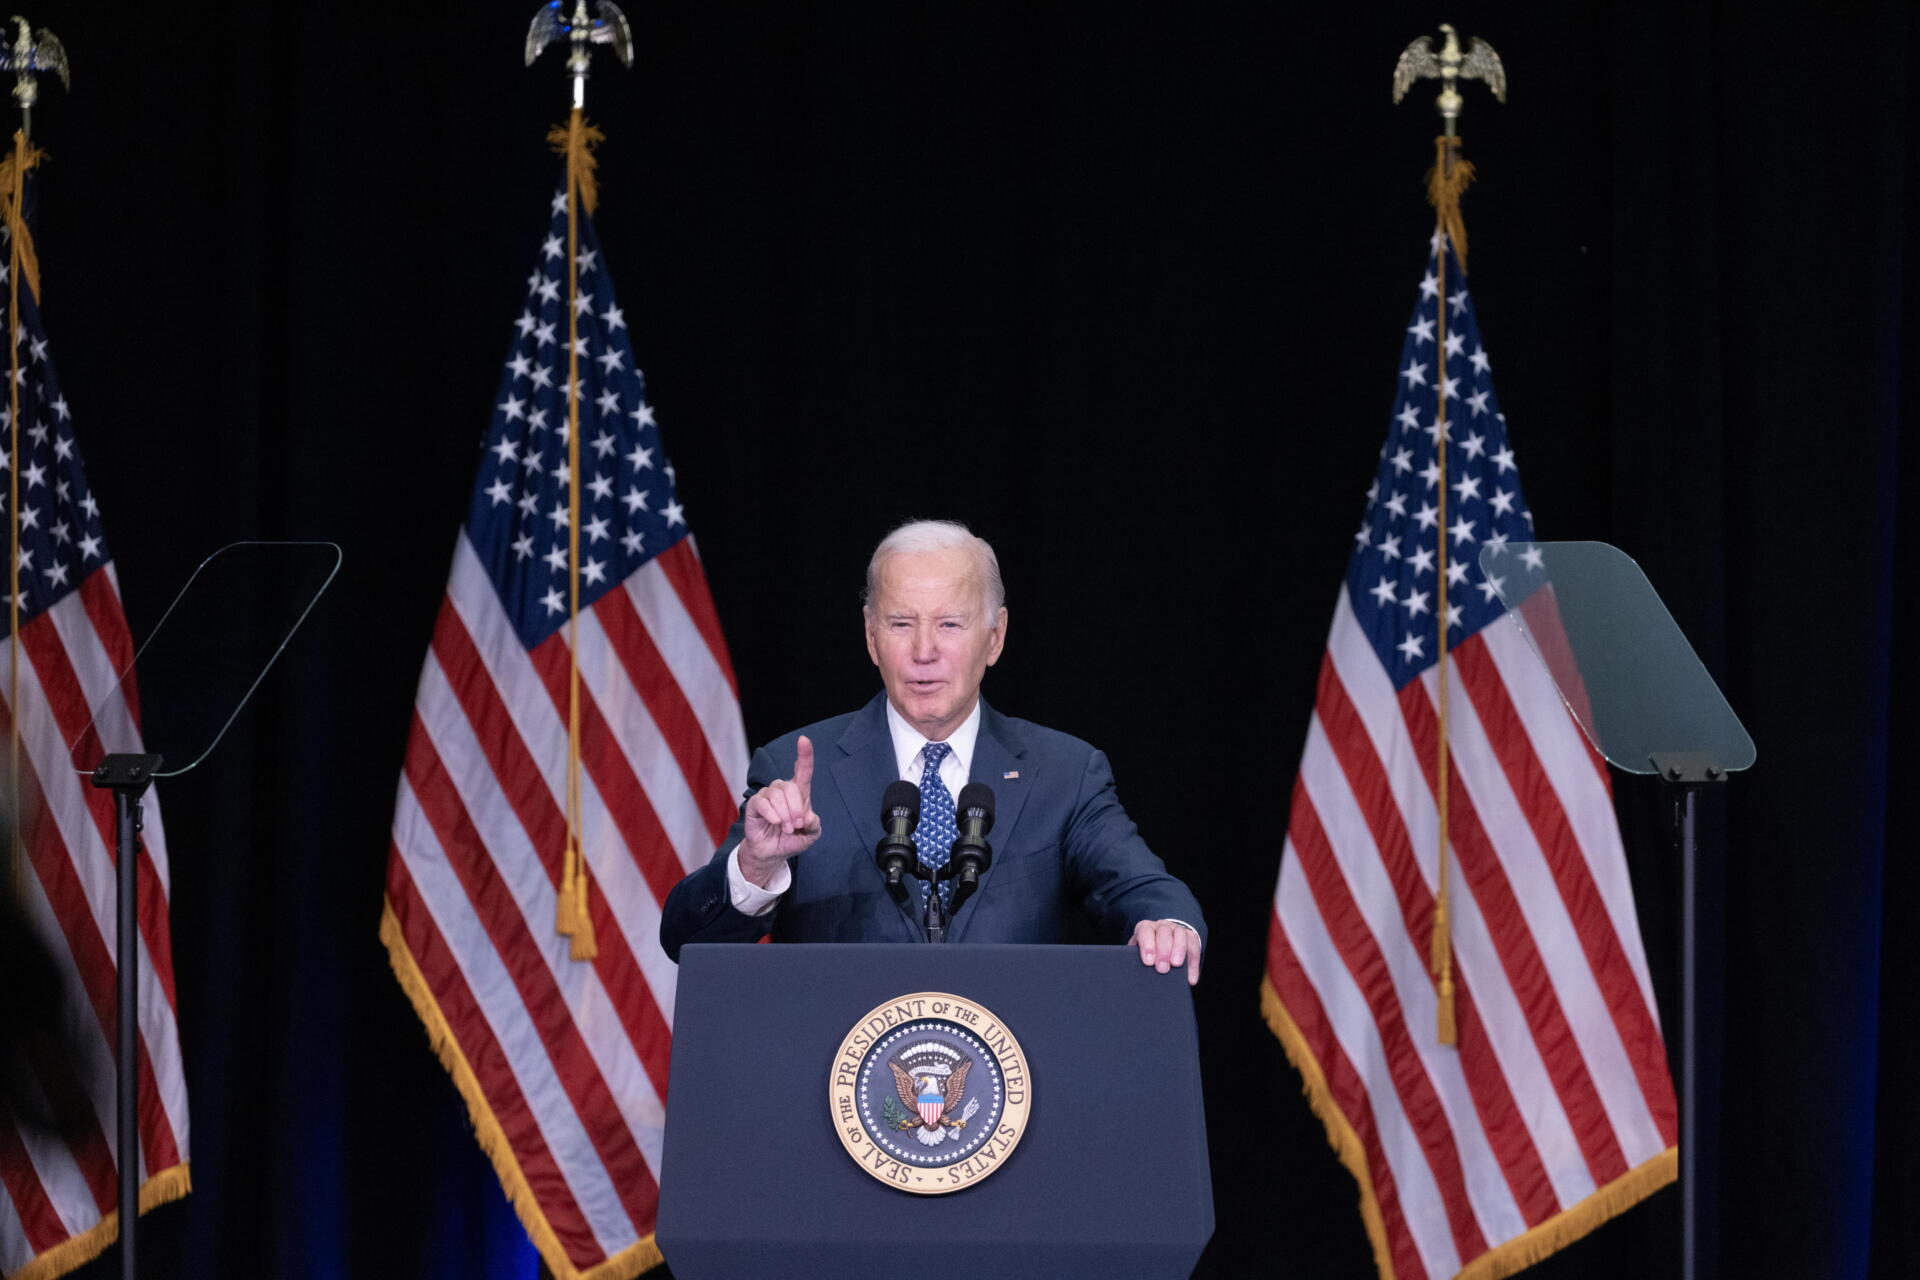 El fiscal exime a Biden, un "anciano con mala memoria", por retener material clasificado